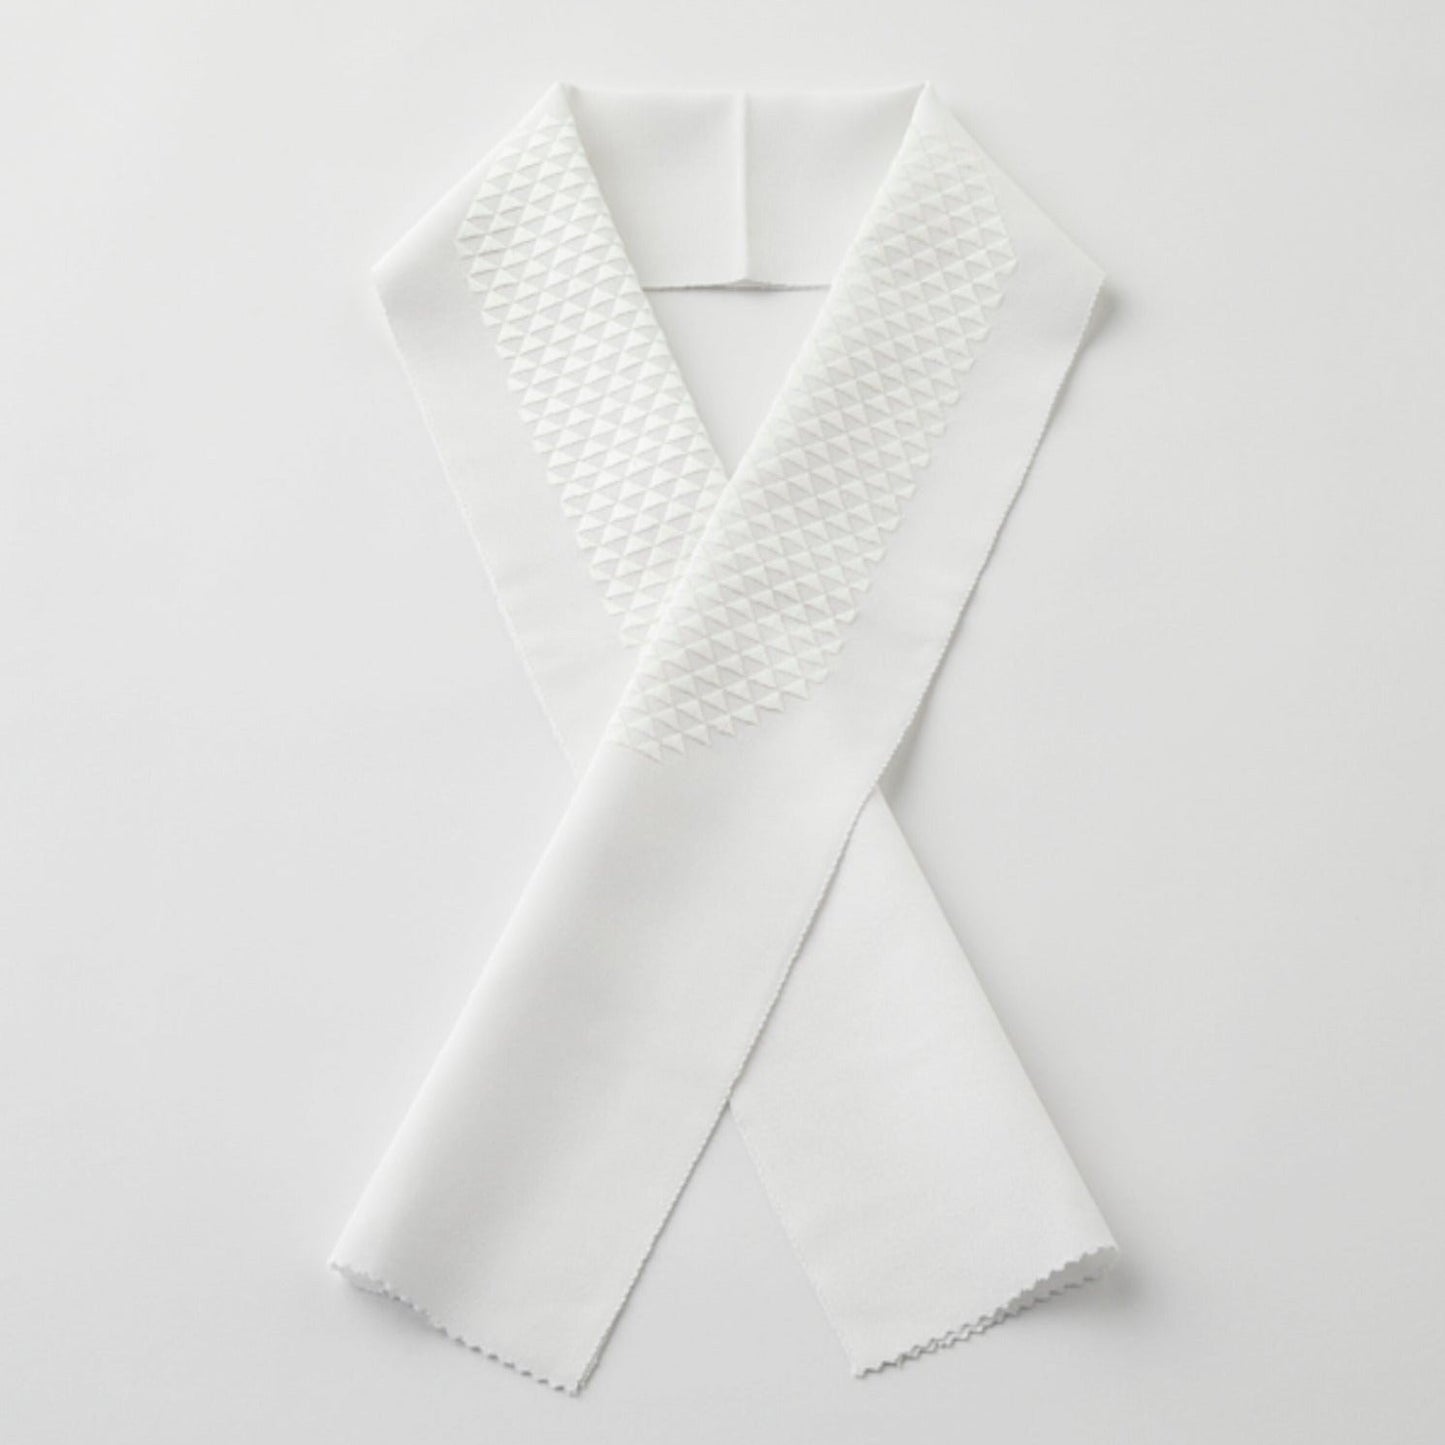 Half-collar embroidery "scales" white/white